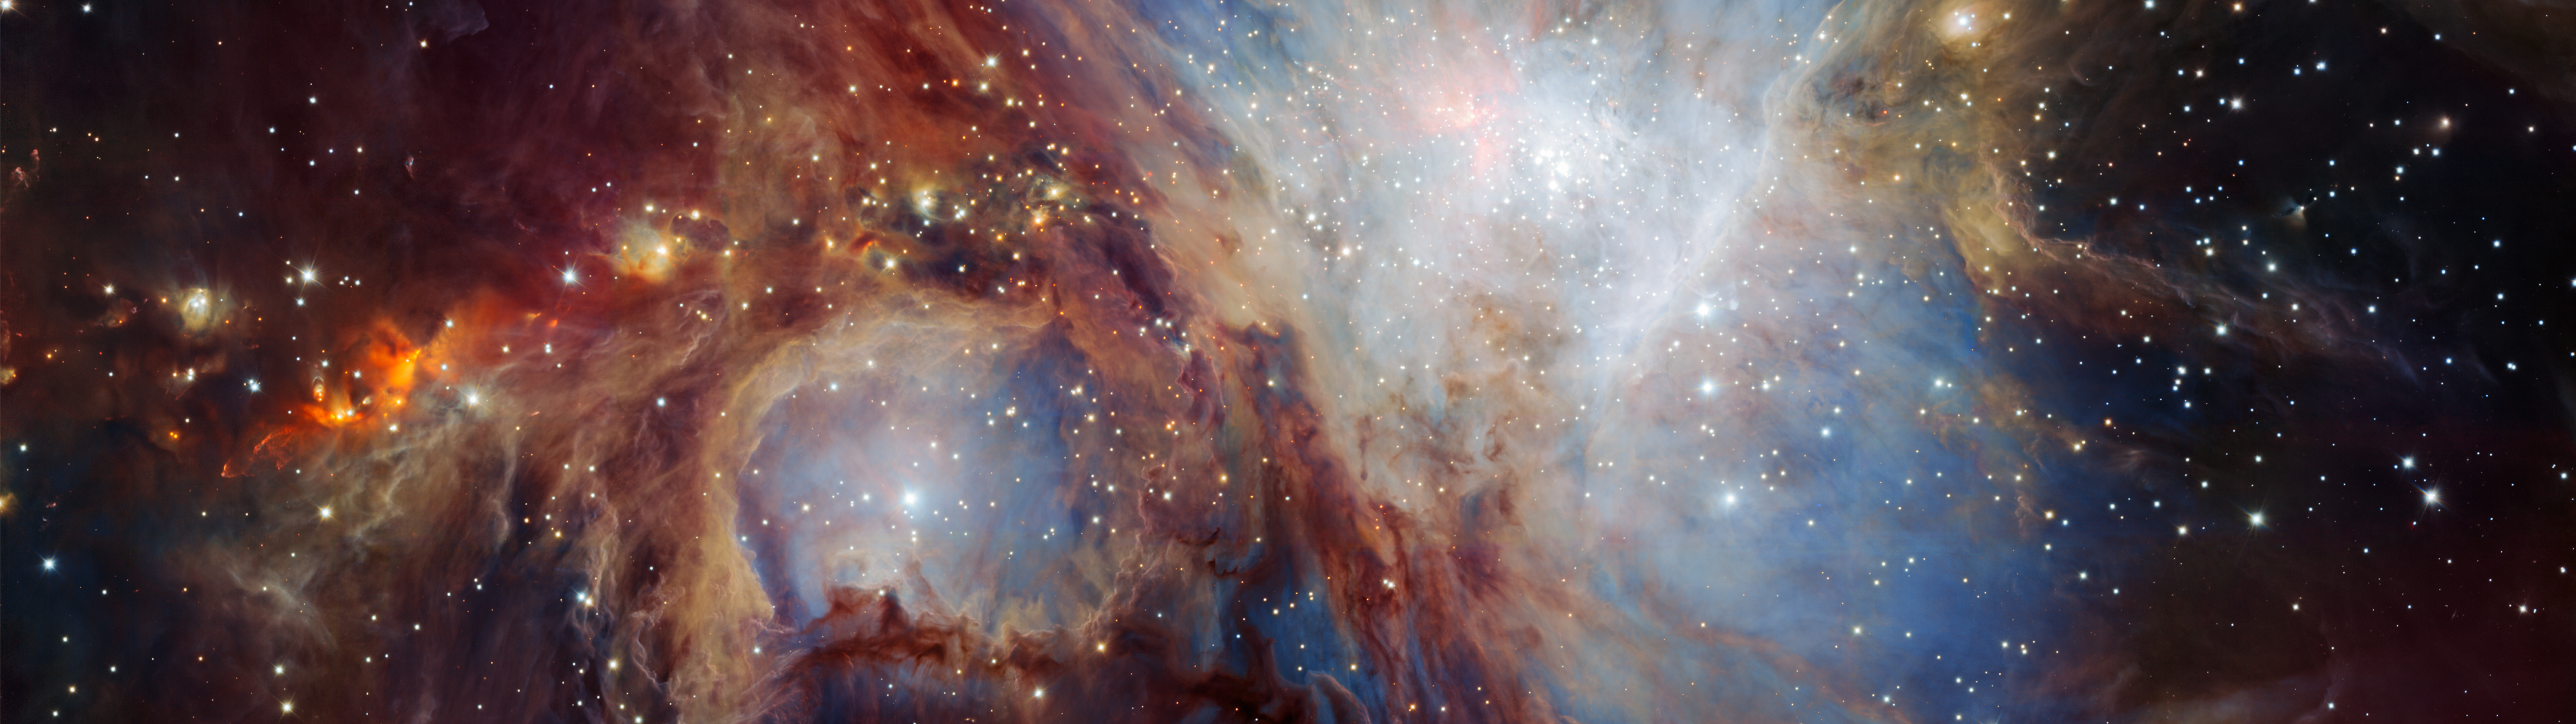 Nebula Orion Space Space Art Digital Art Astronomy Super Ultrawide 3840x1080